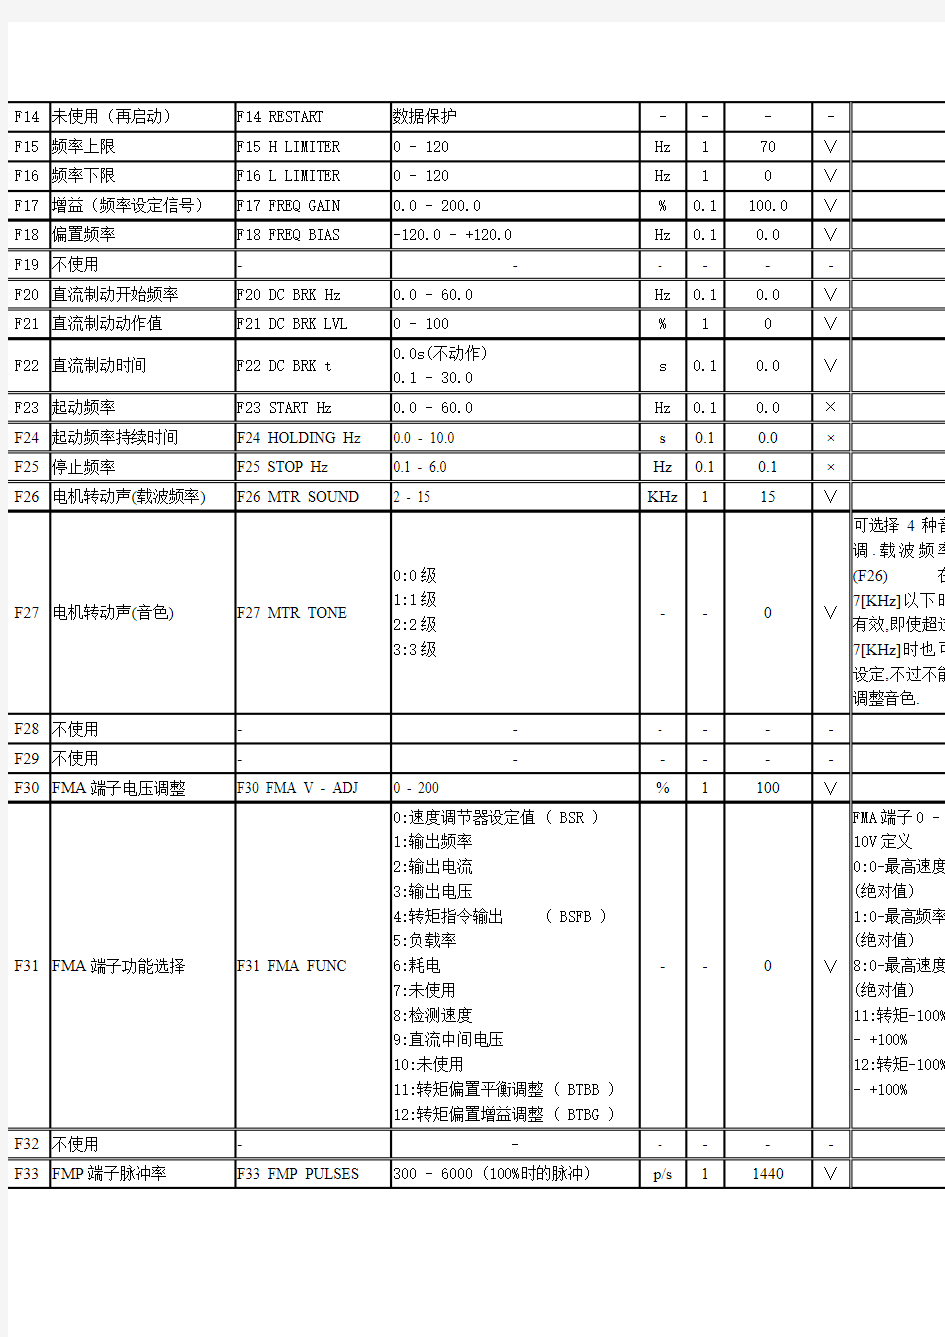 FRN G11UD 系列电梯专用型日本富士变频器功能表